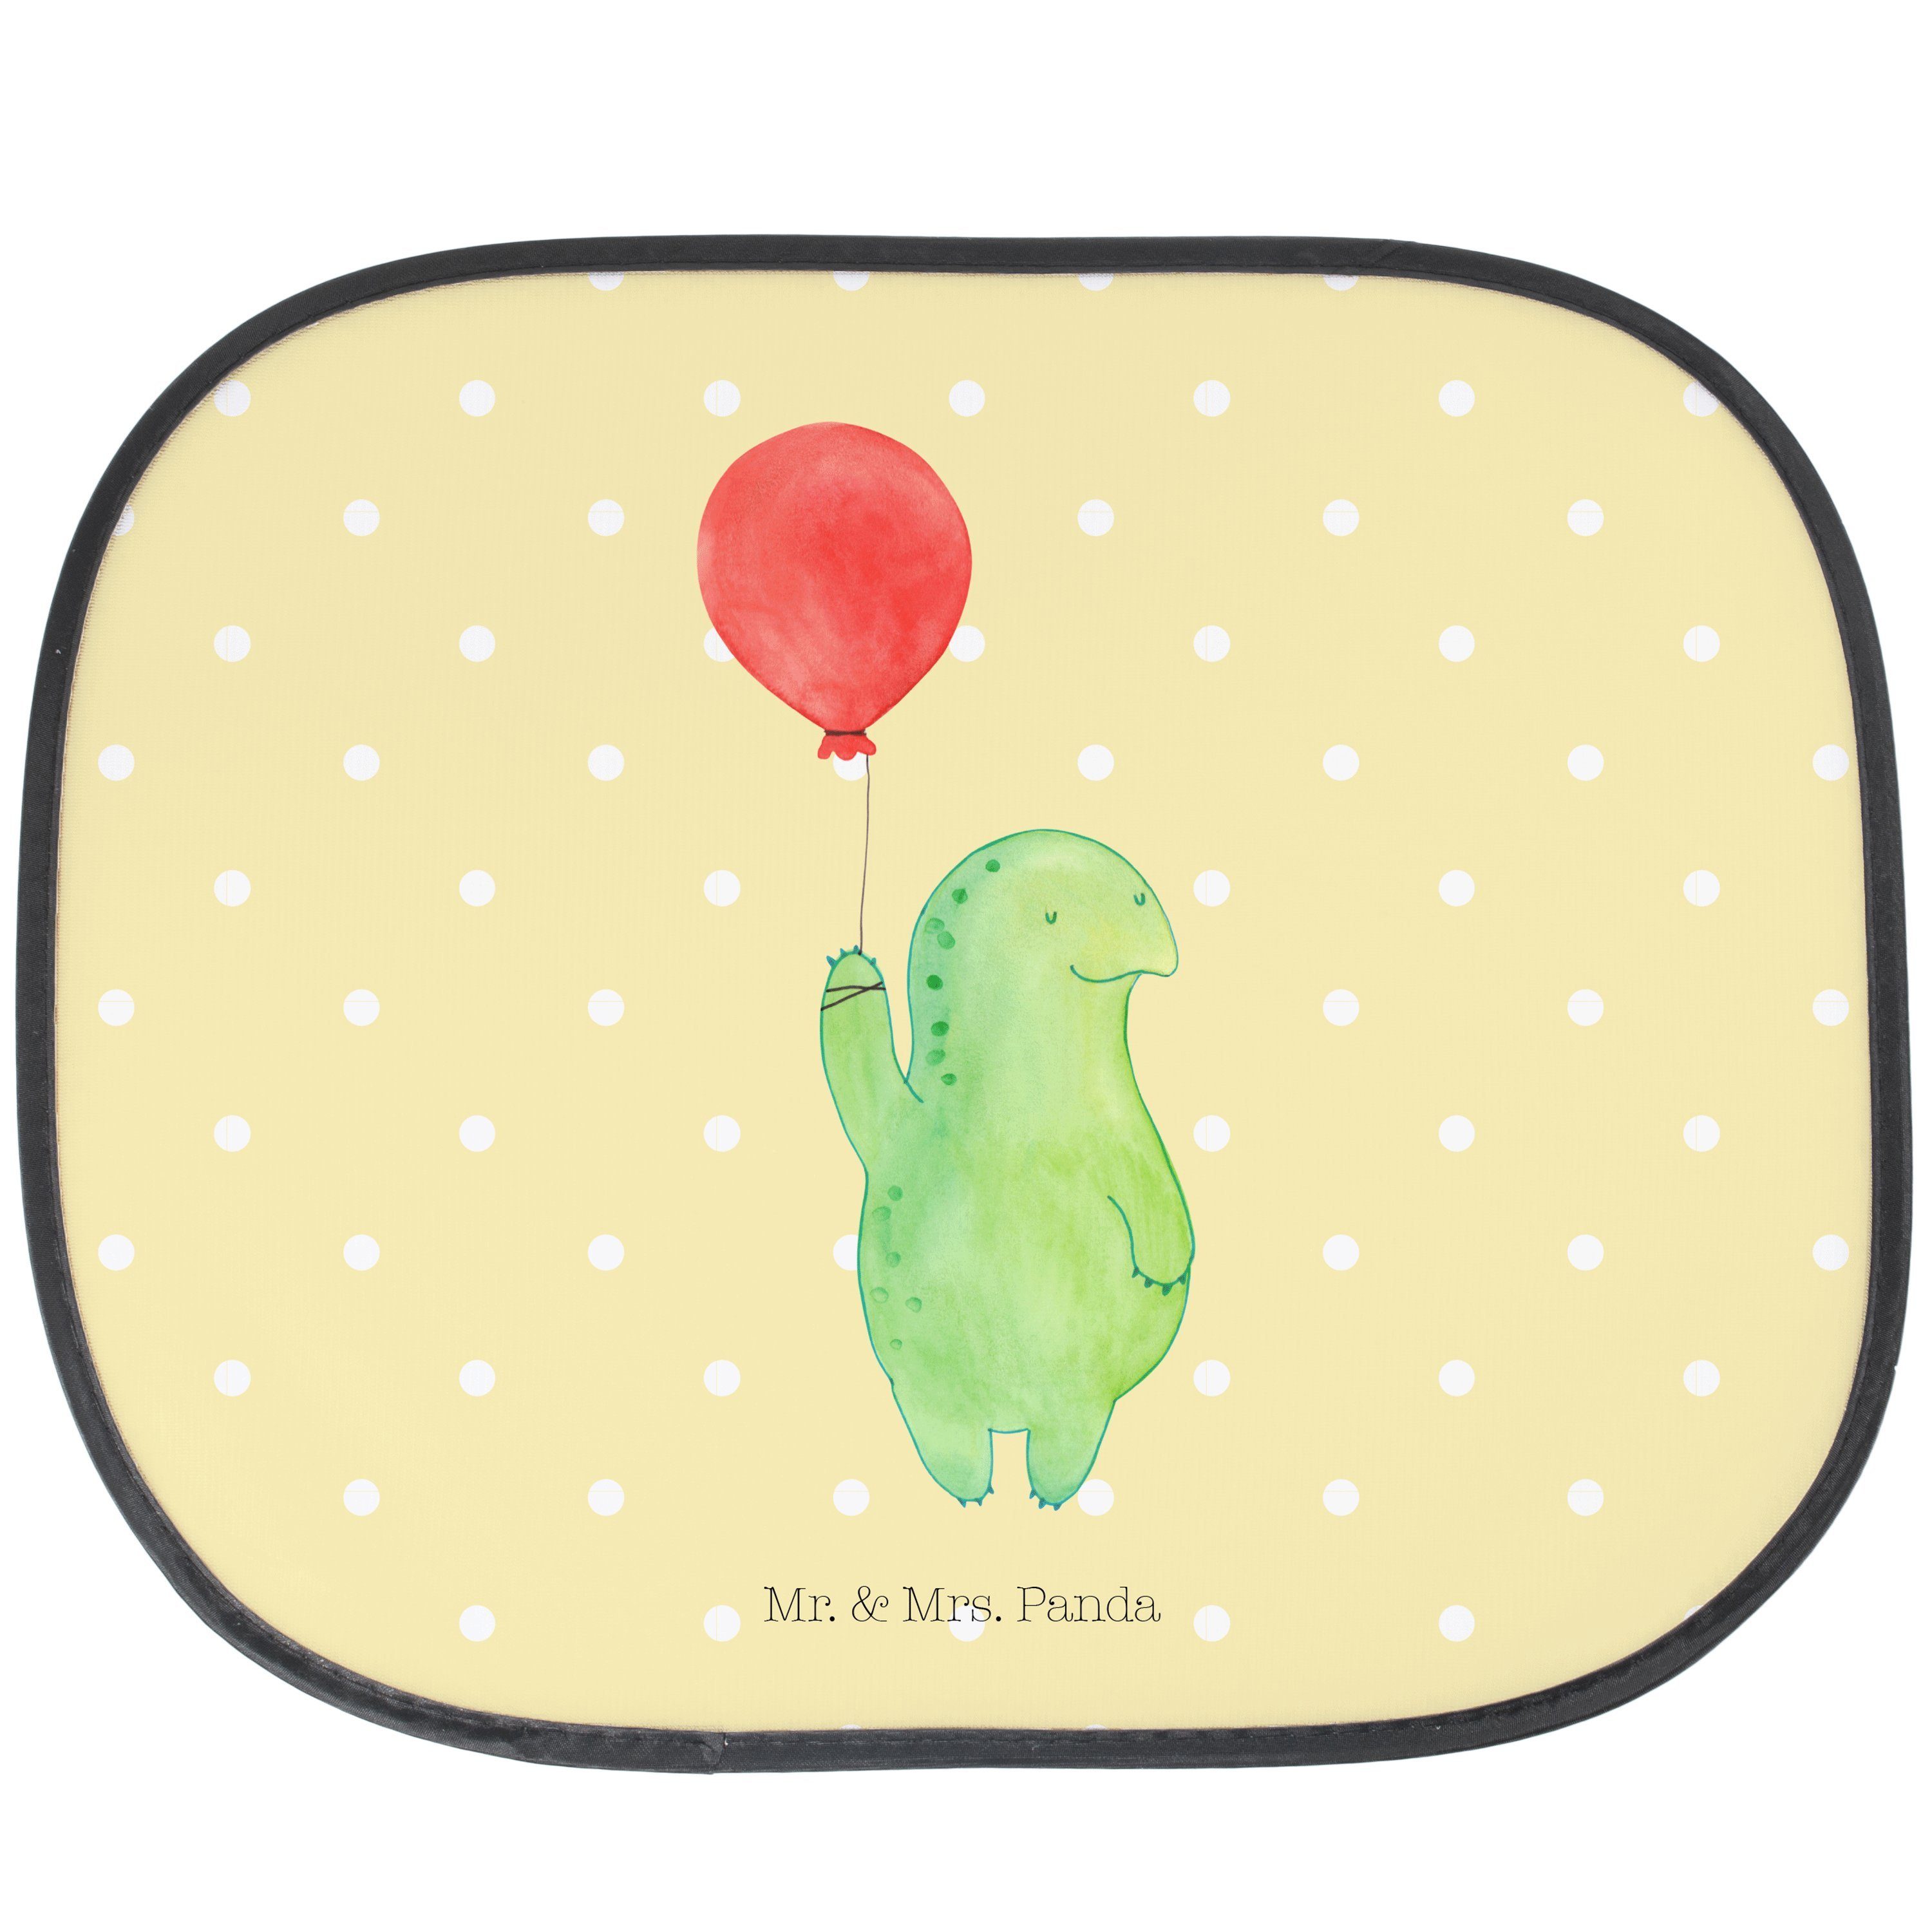 Sonnenschutz Schildkröte Luftballon - Gelb Pastell - Geschenk,  Schildkröten, Sonne, Mr. & Mrs. Panda, Seidenmatt, Farbecht